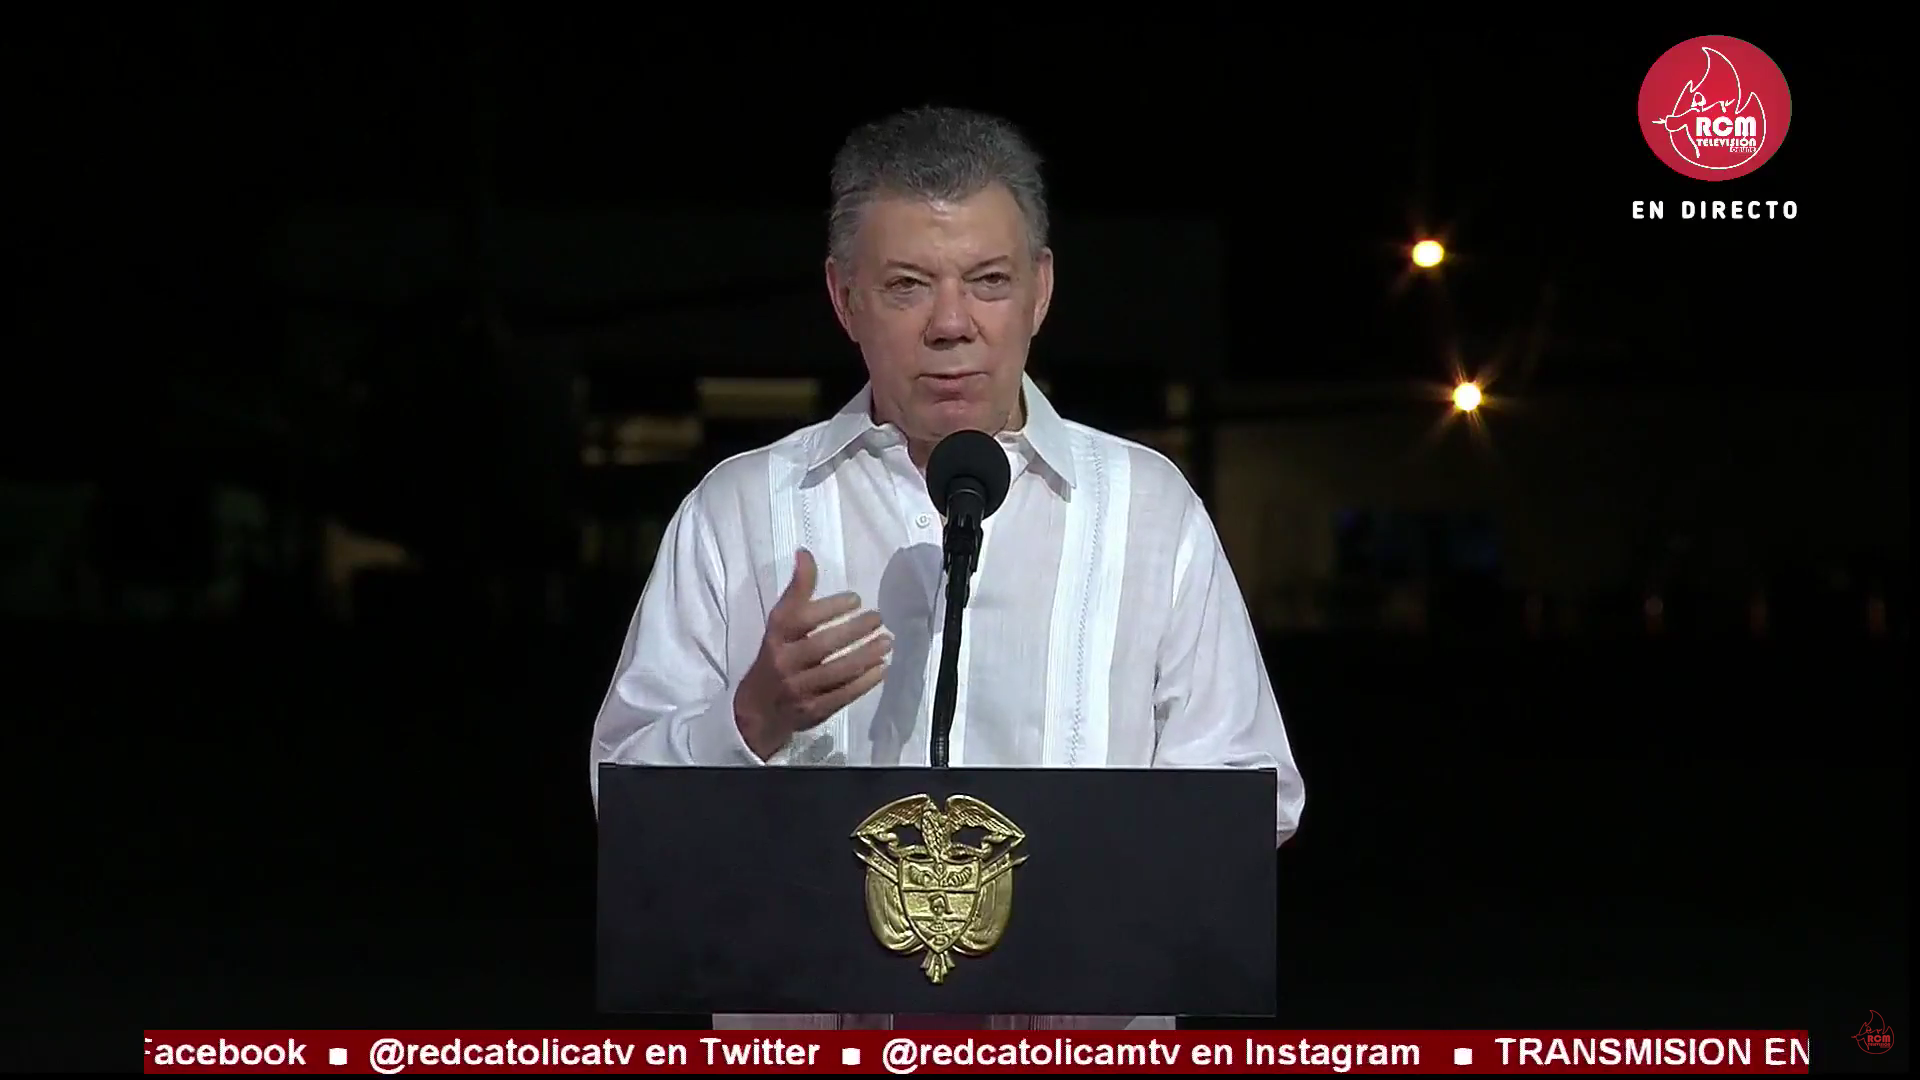 Le président Juan Manuel Santos Calderon, aéroport de Cartagena, 10/09/2017, capture Canal Institucional